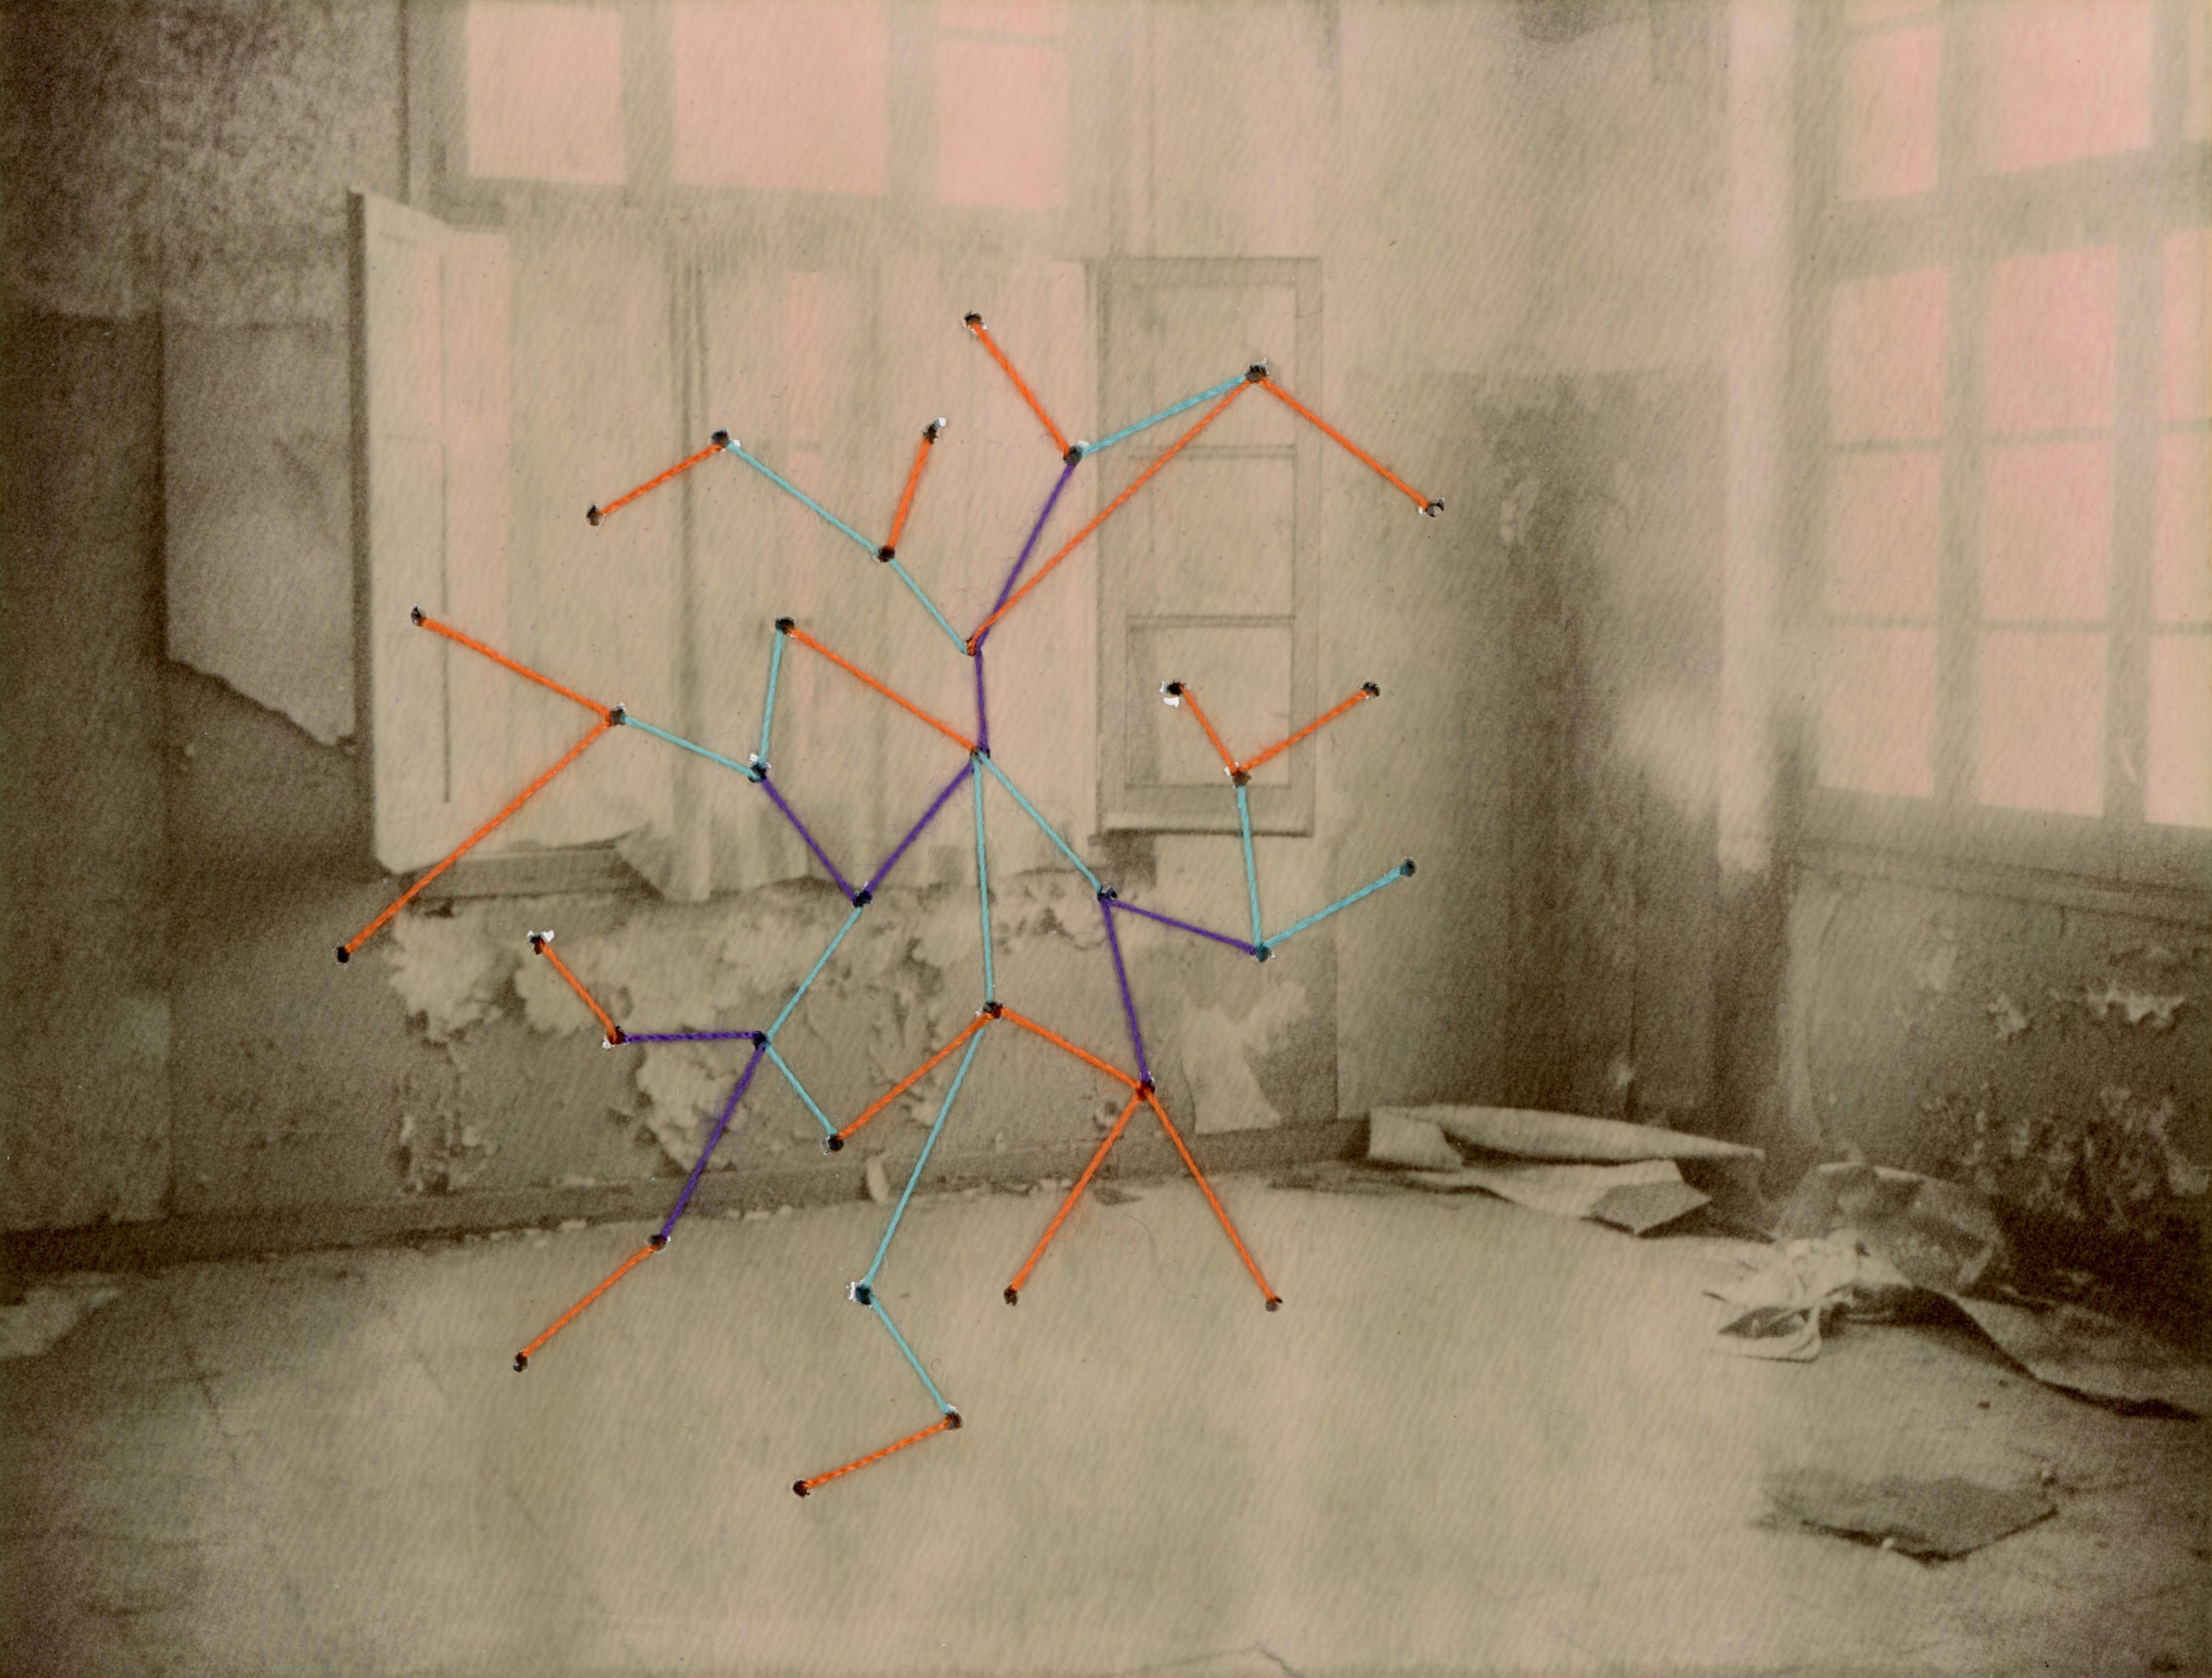 Traces - Contemporary, Conceptual, Polaroid, 21st Century, Color, Interior